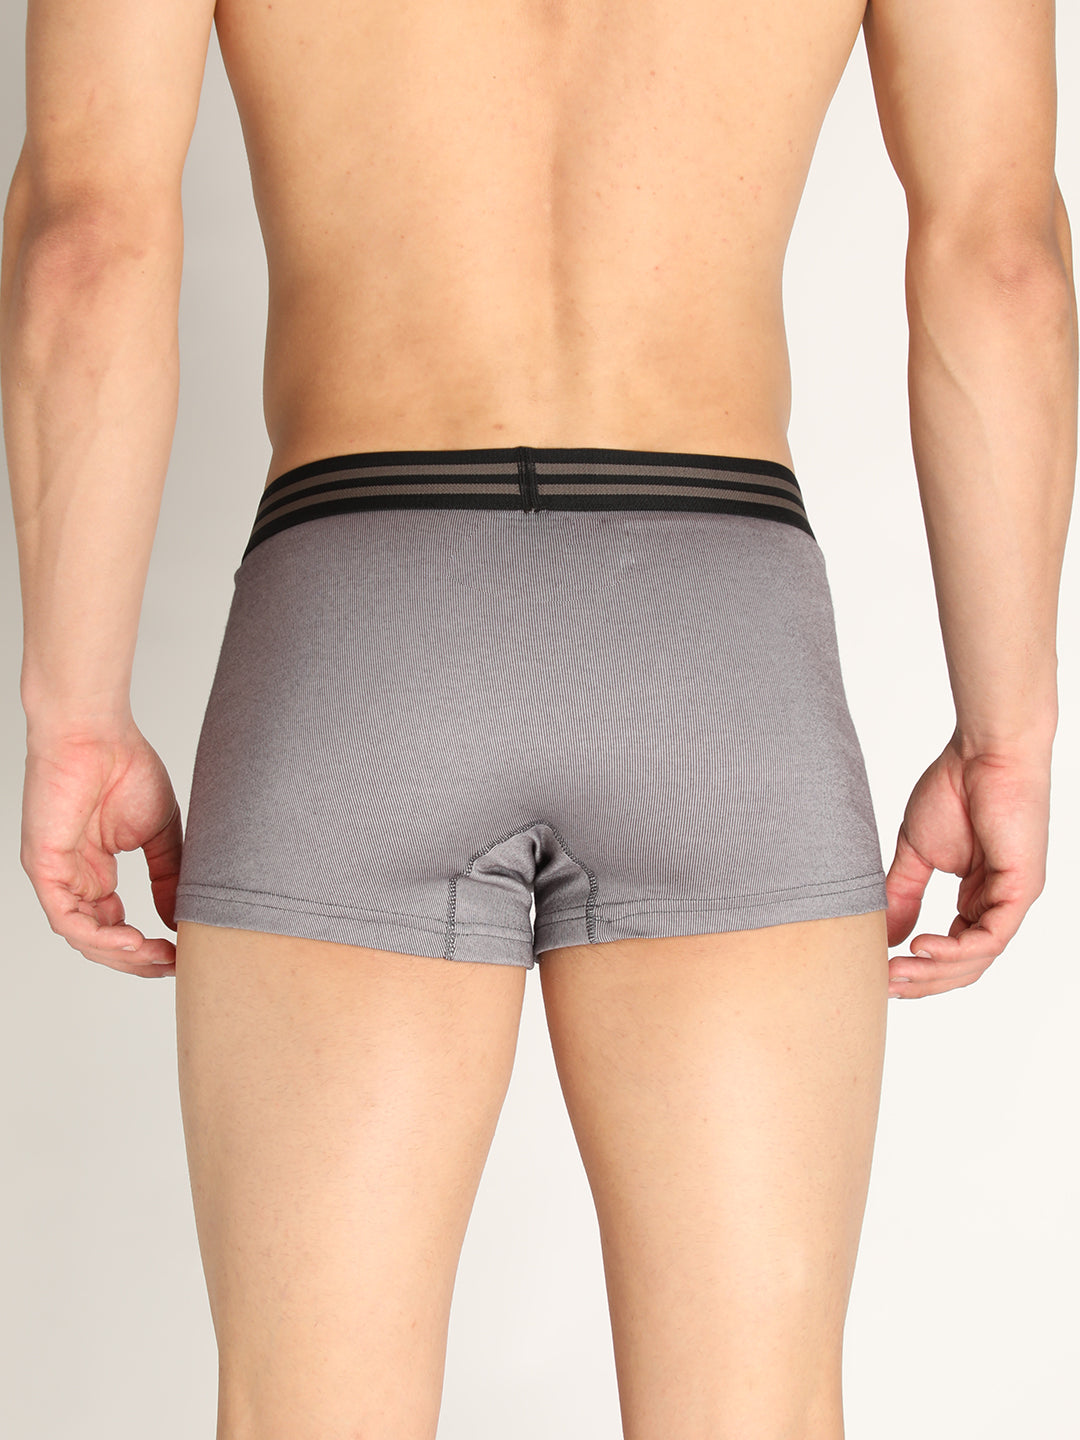 Neva koolin Solid Short Trunk Underwear for Men- Dark Grey, Maroon, Olive Collection (Pack of 3)